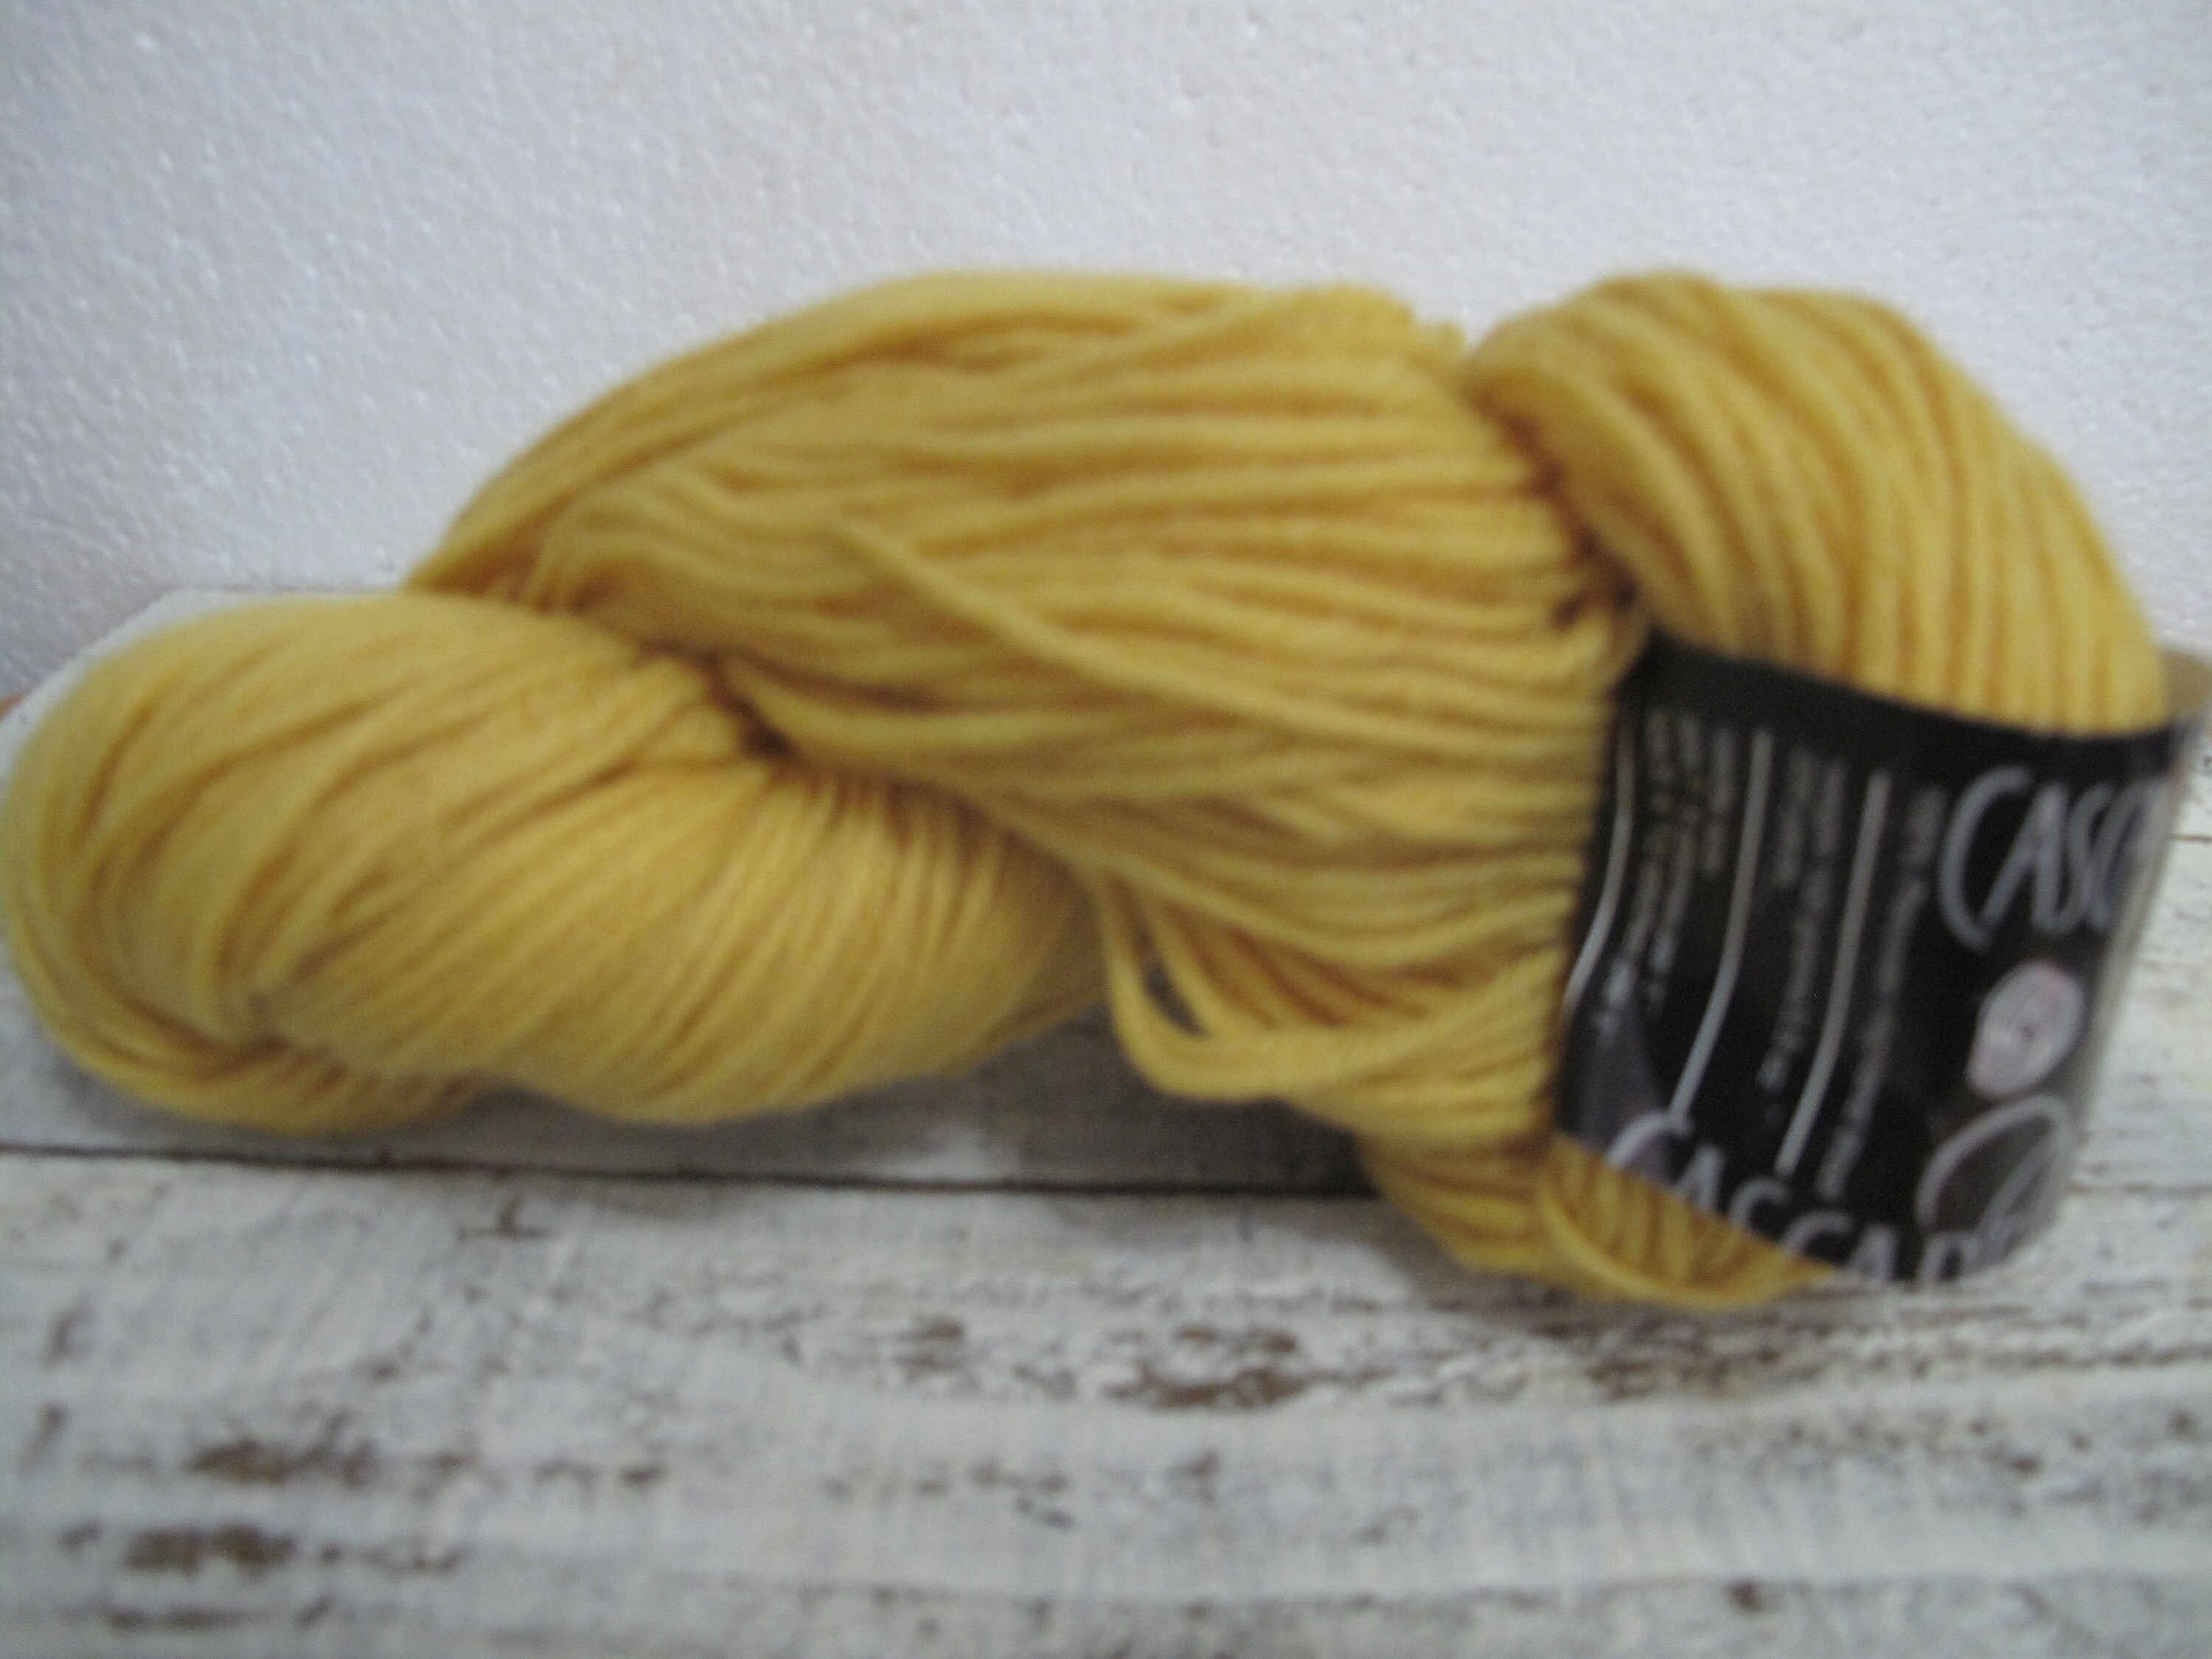 Cascade 220 Superwash Merino Yarn - 005 Golden Yellow at Jimmy